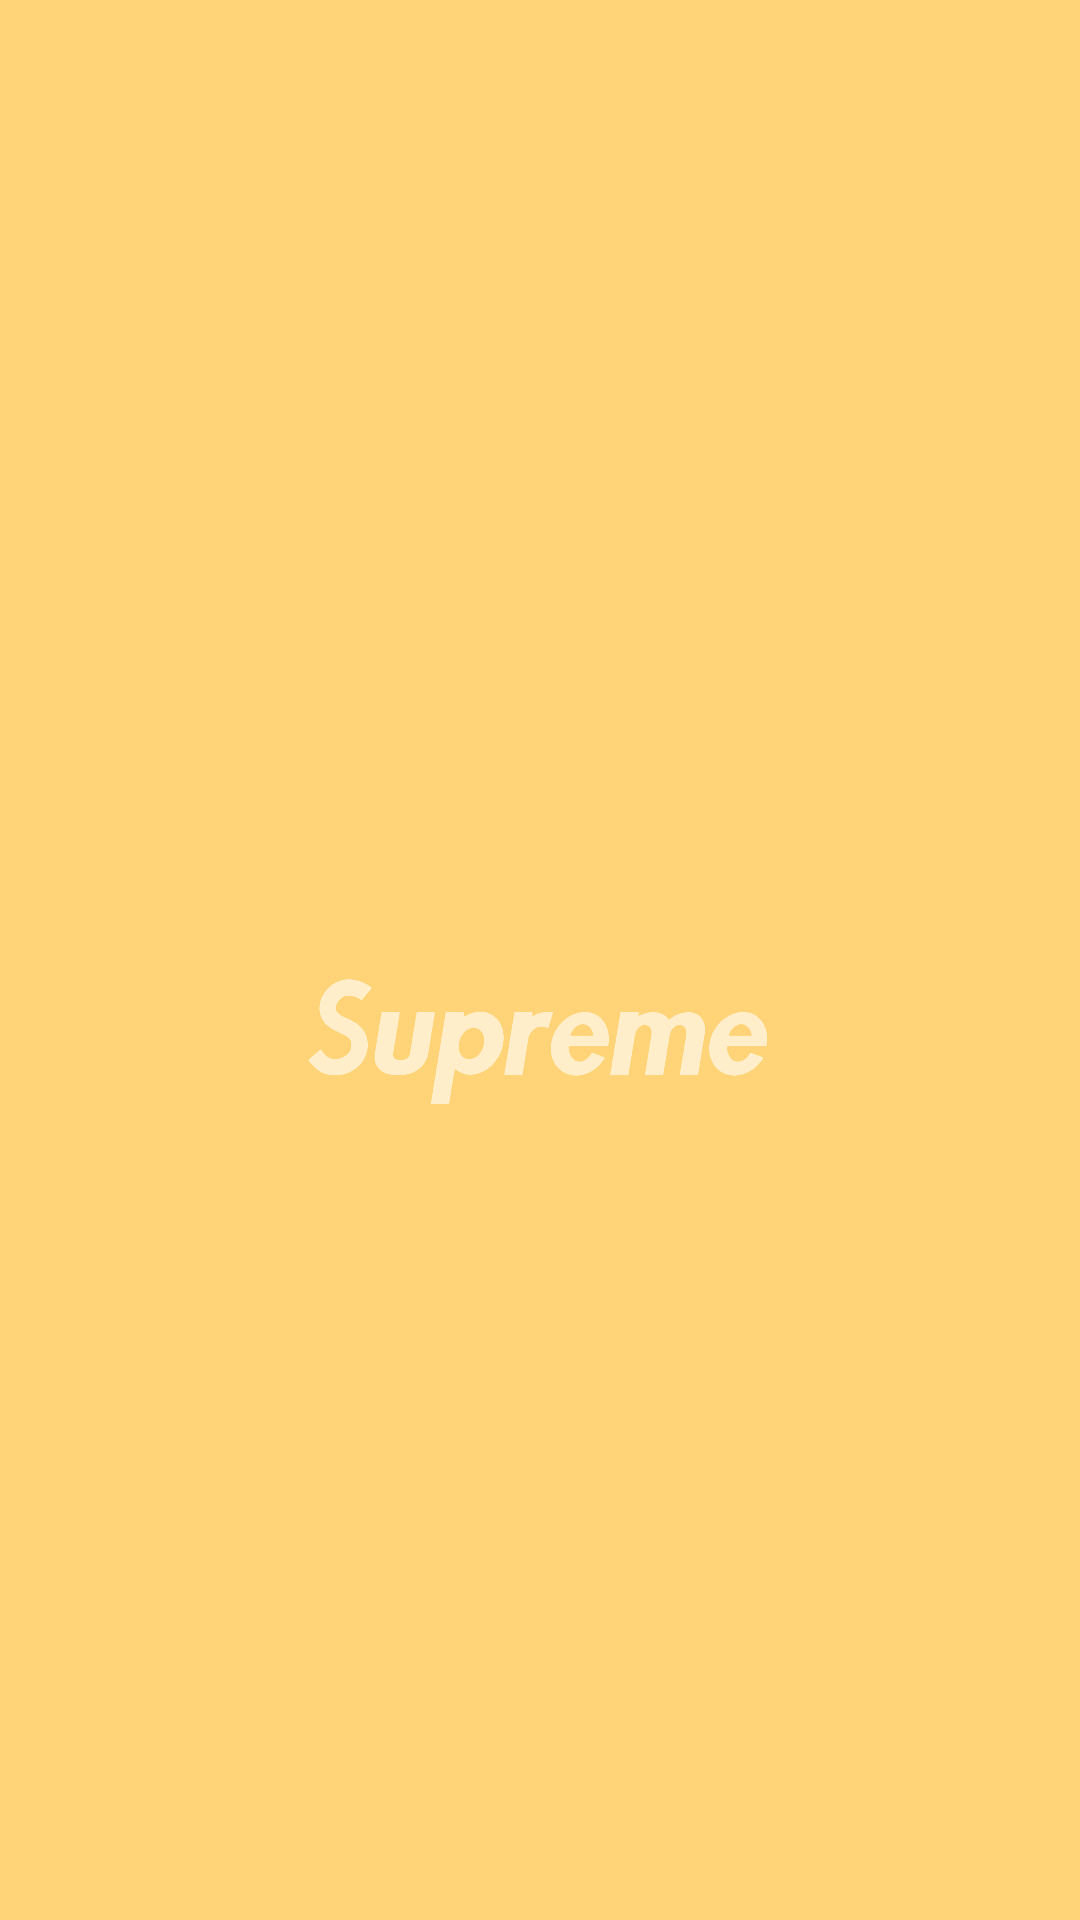 supreme20 - Supreme[シュプリーム]の高画質スマホ壁紙23枚 [iPhone＆Androidに対応]